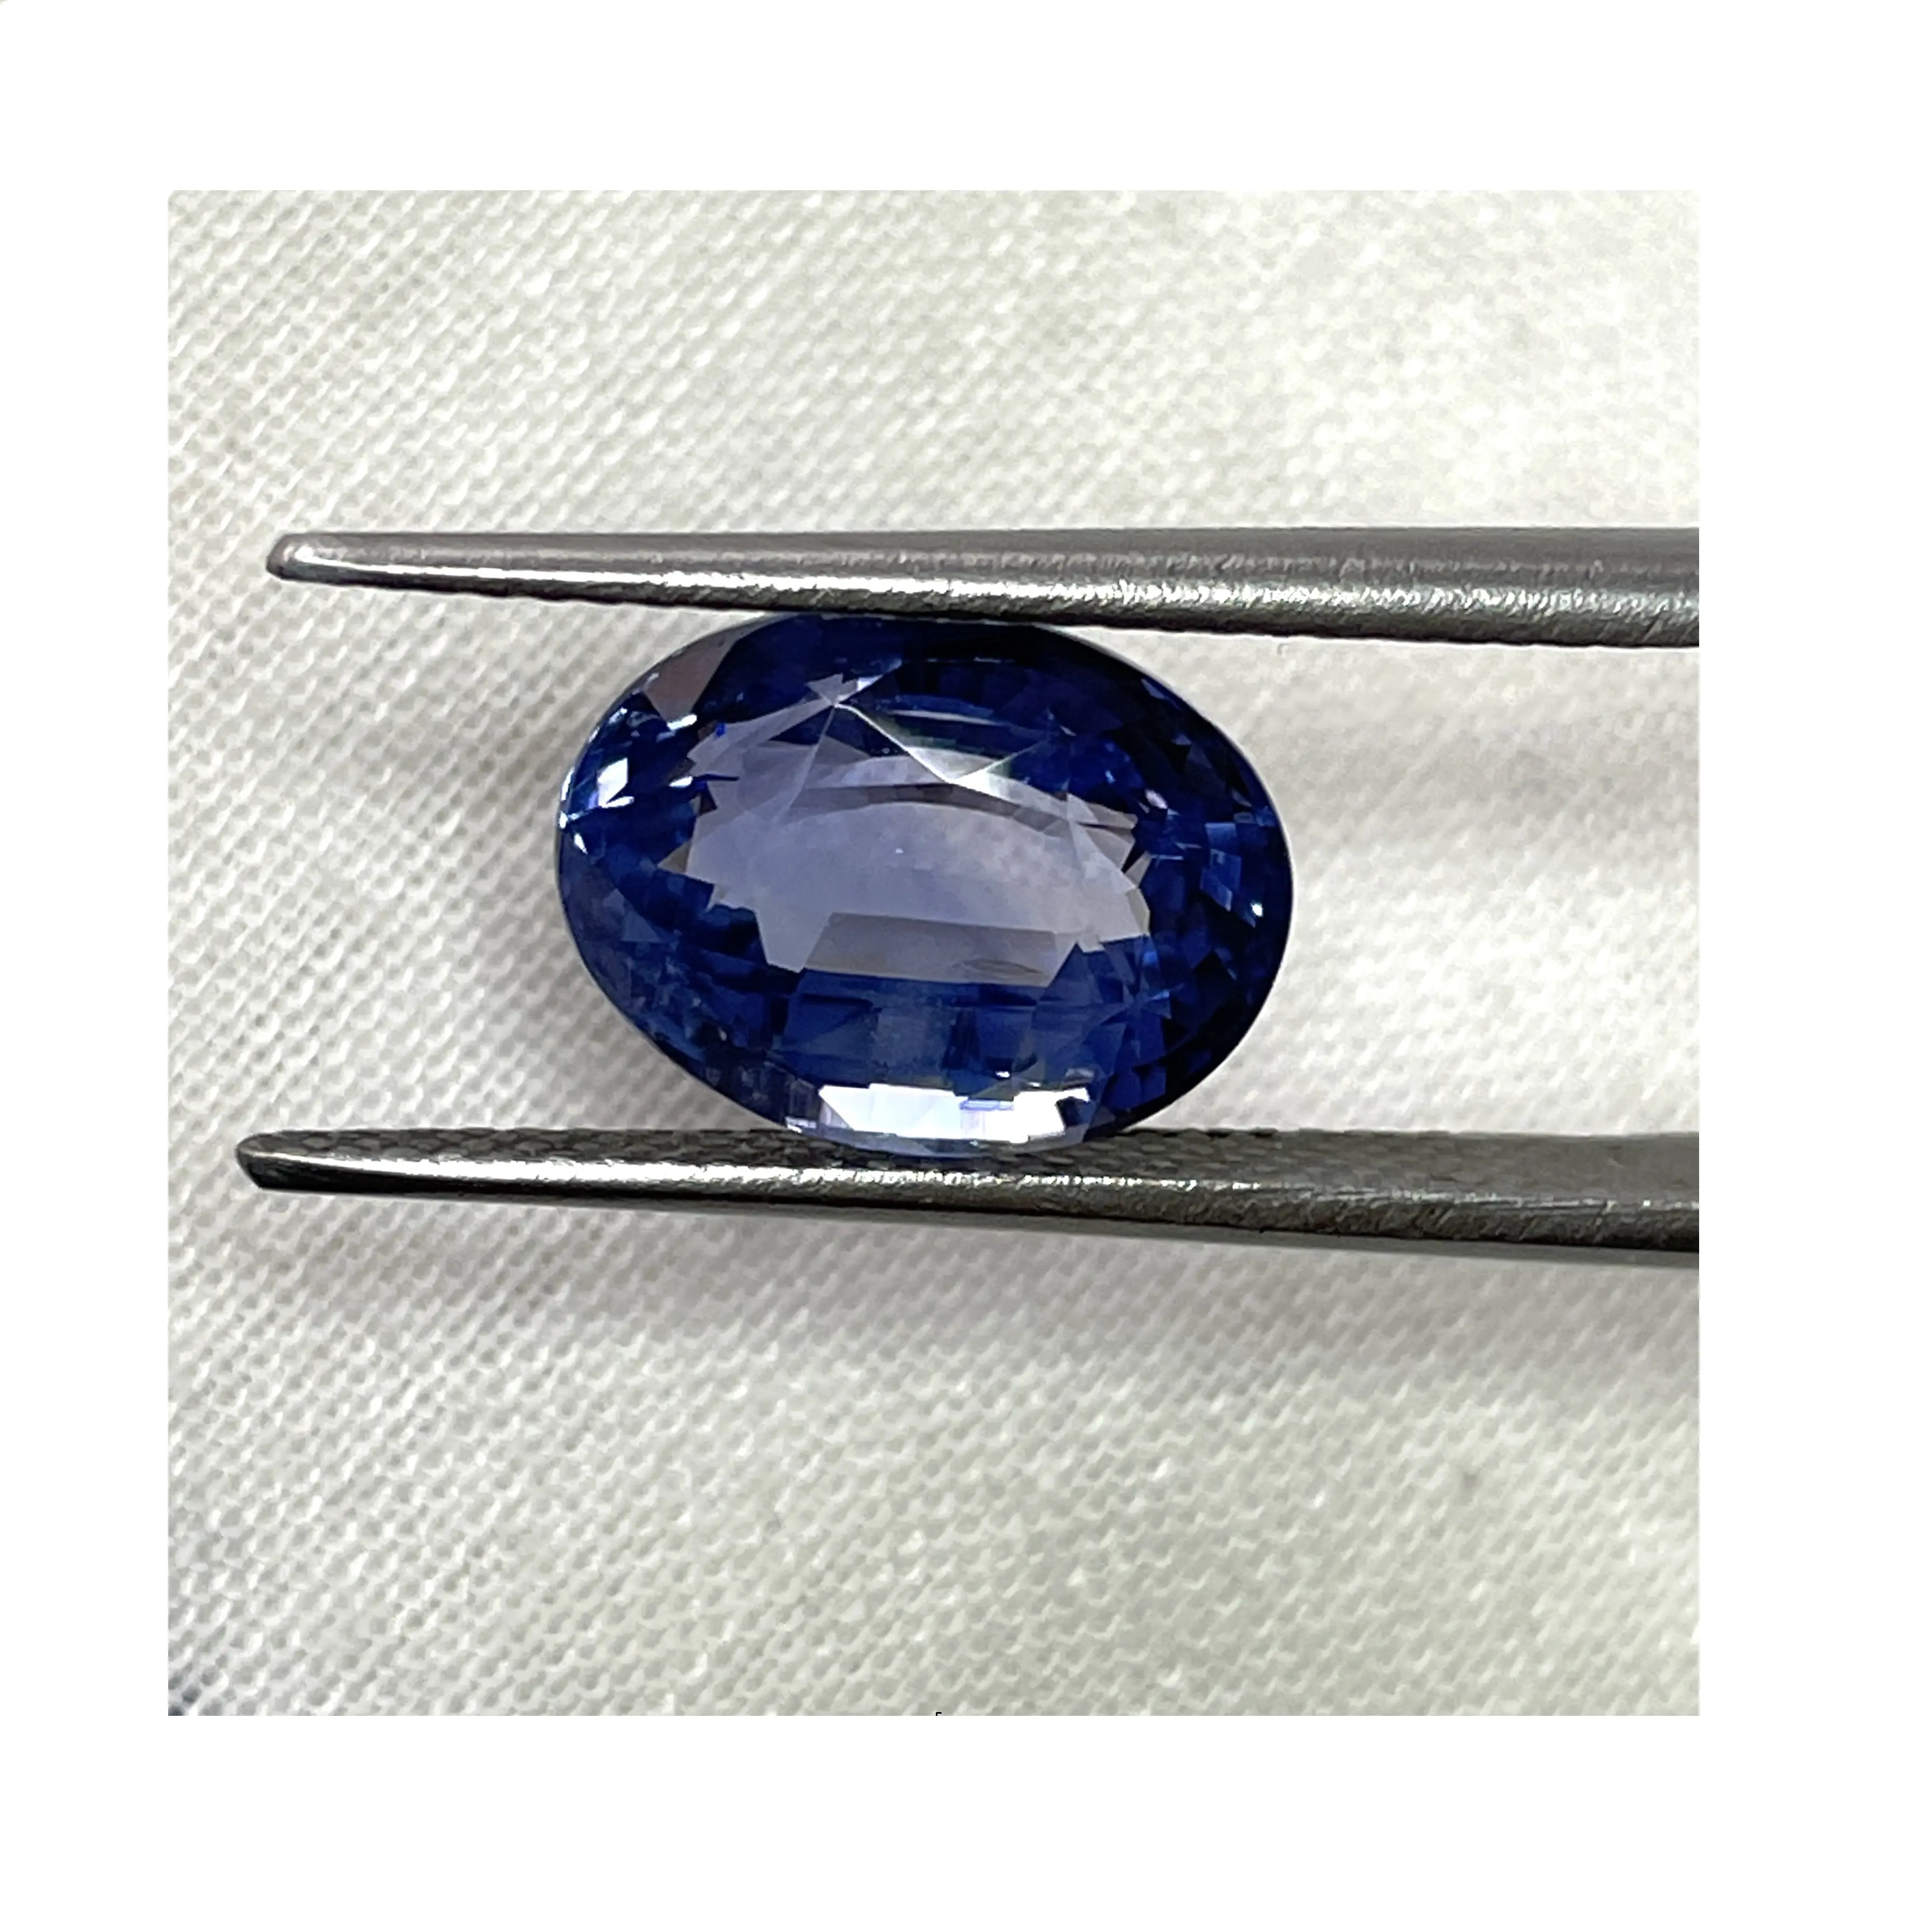 Fine quality best grade cornflower blue no heat Ceylon sapphire 5 carat oval cut for ring gemstone at best price from India